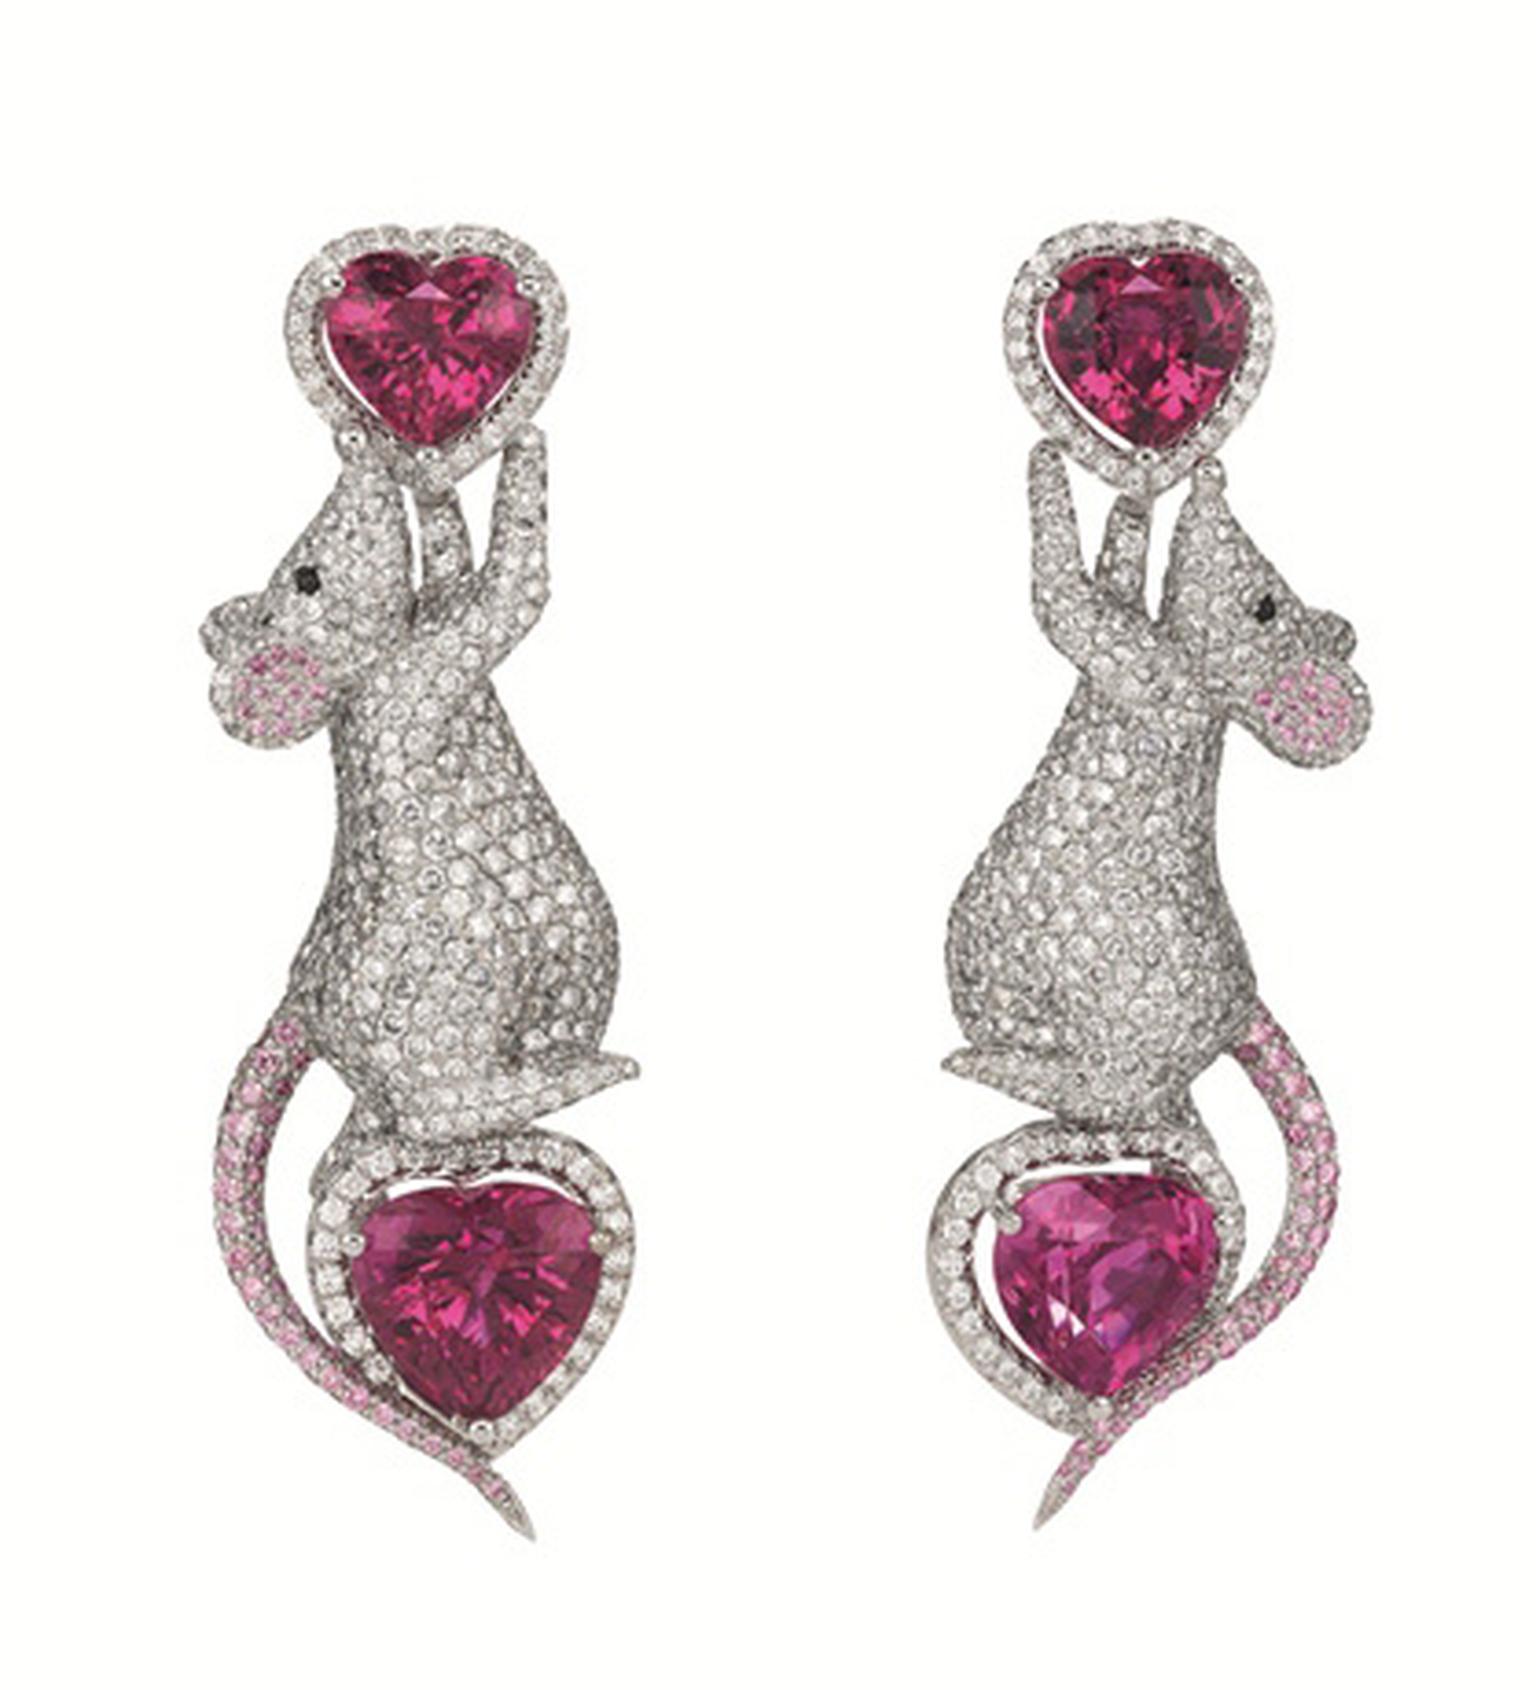 Chopard Animal World Mice earrings set with diamonds and rubies